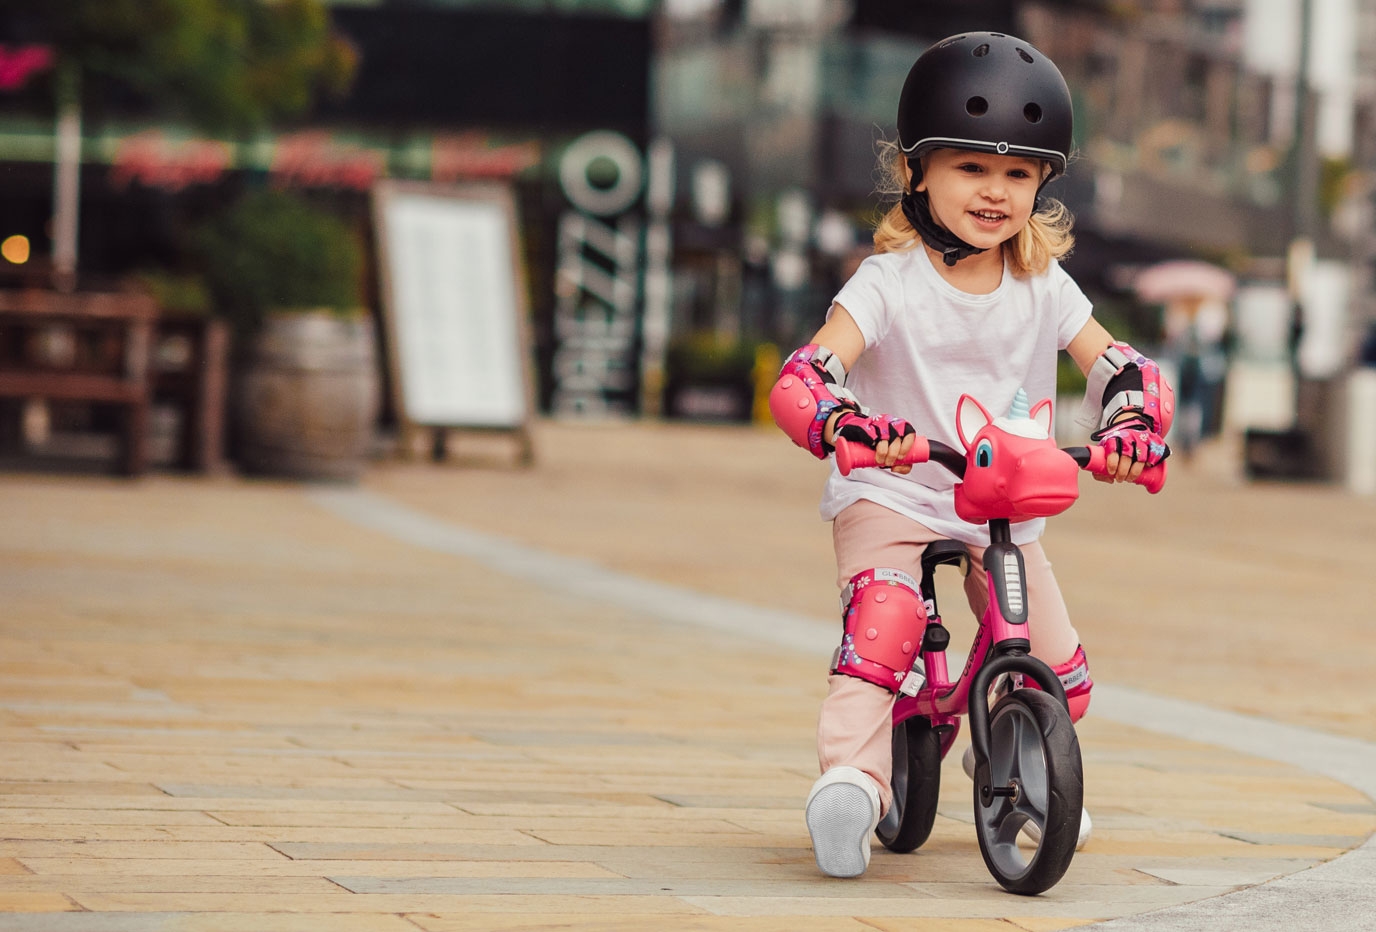 GO BIKE best pink balance bike for girls